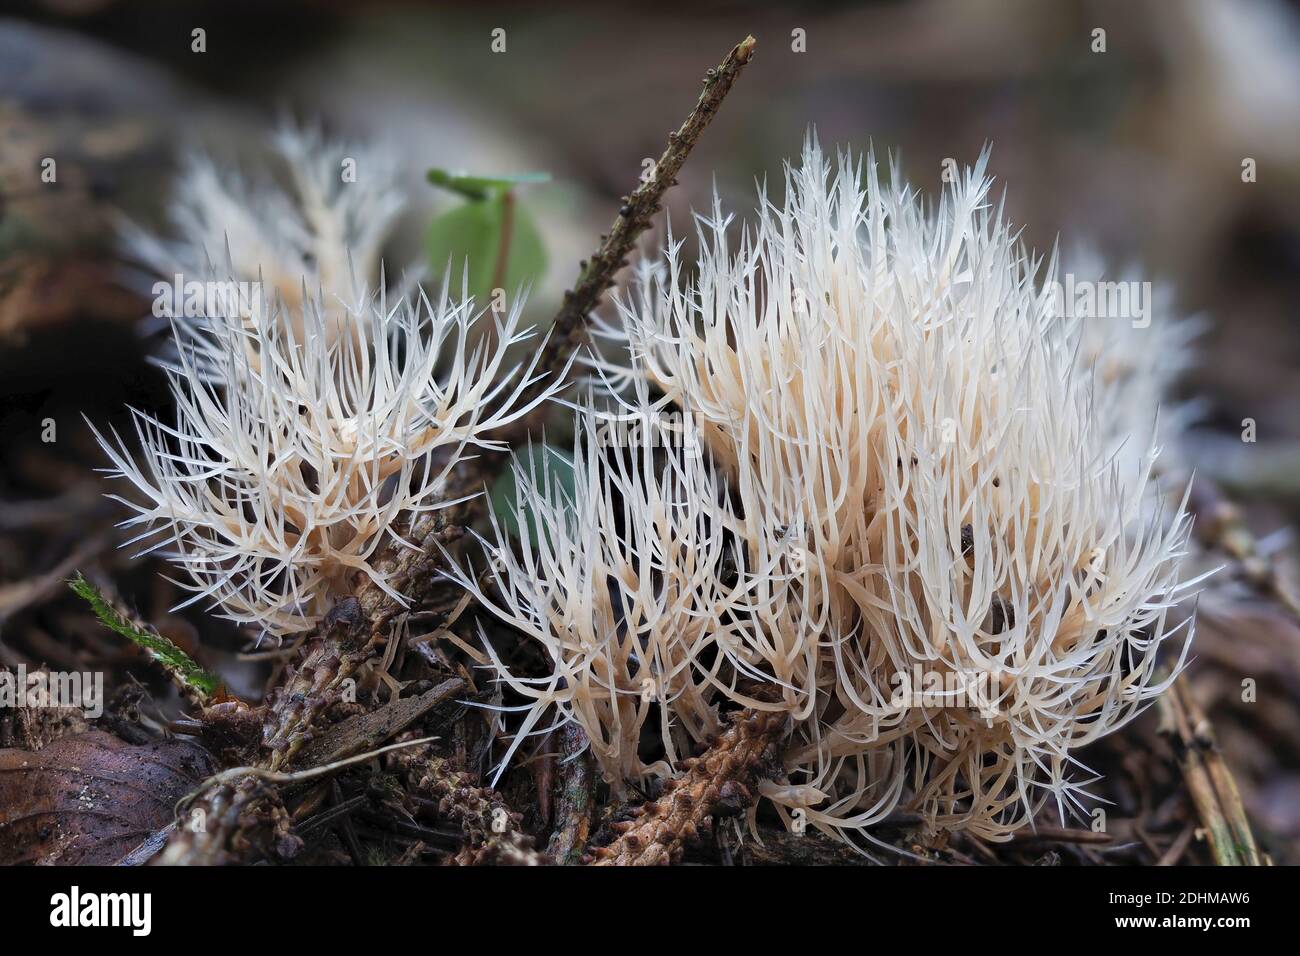 The Pterula multifida is an inedible mushroom , stacked macro photo Stock Photo